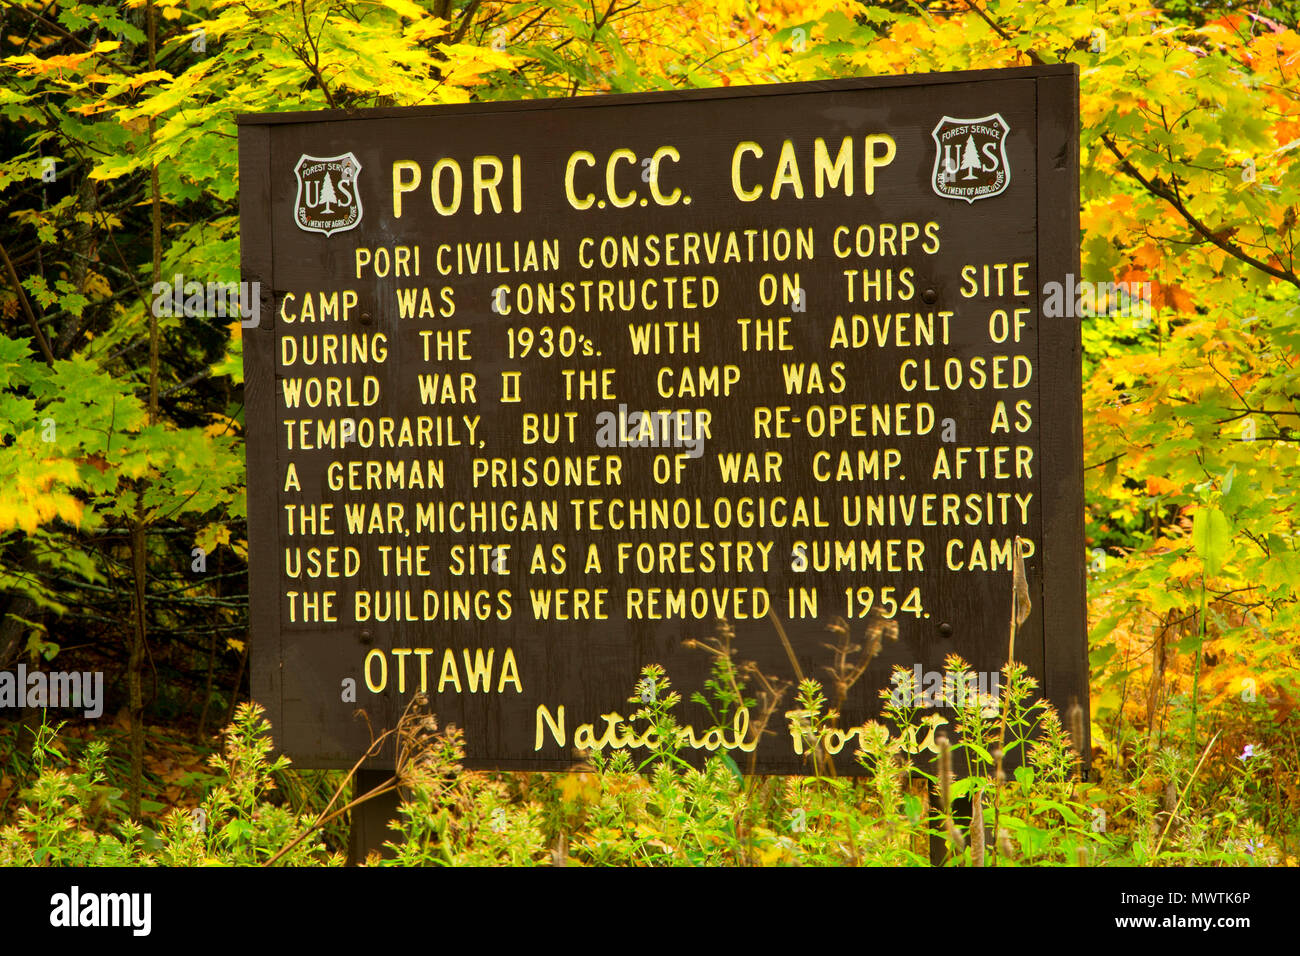 Pori Civilian Conservation Corps (CCC) Camp sign, Ottawa National